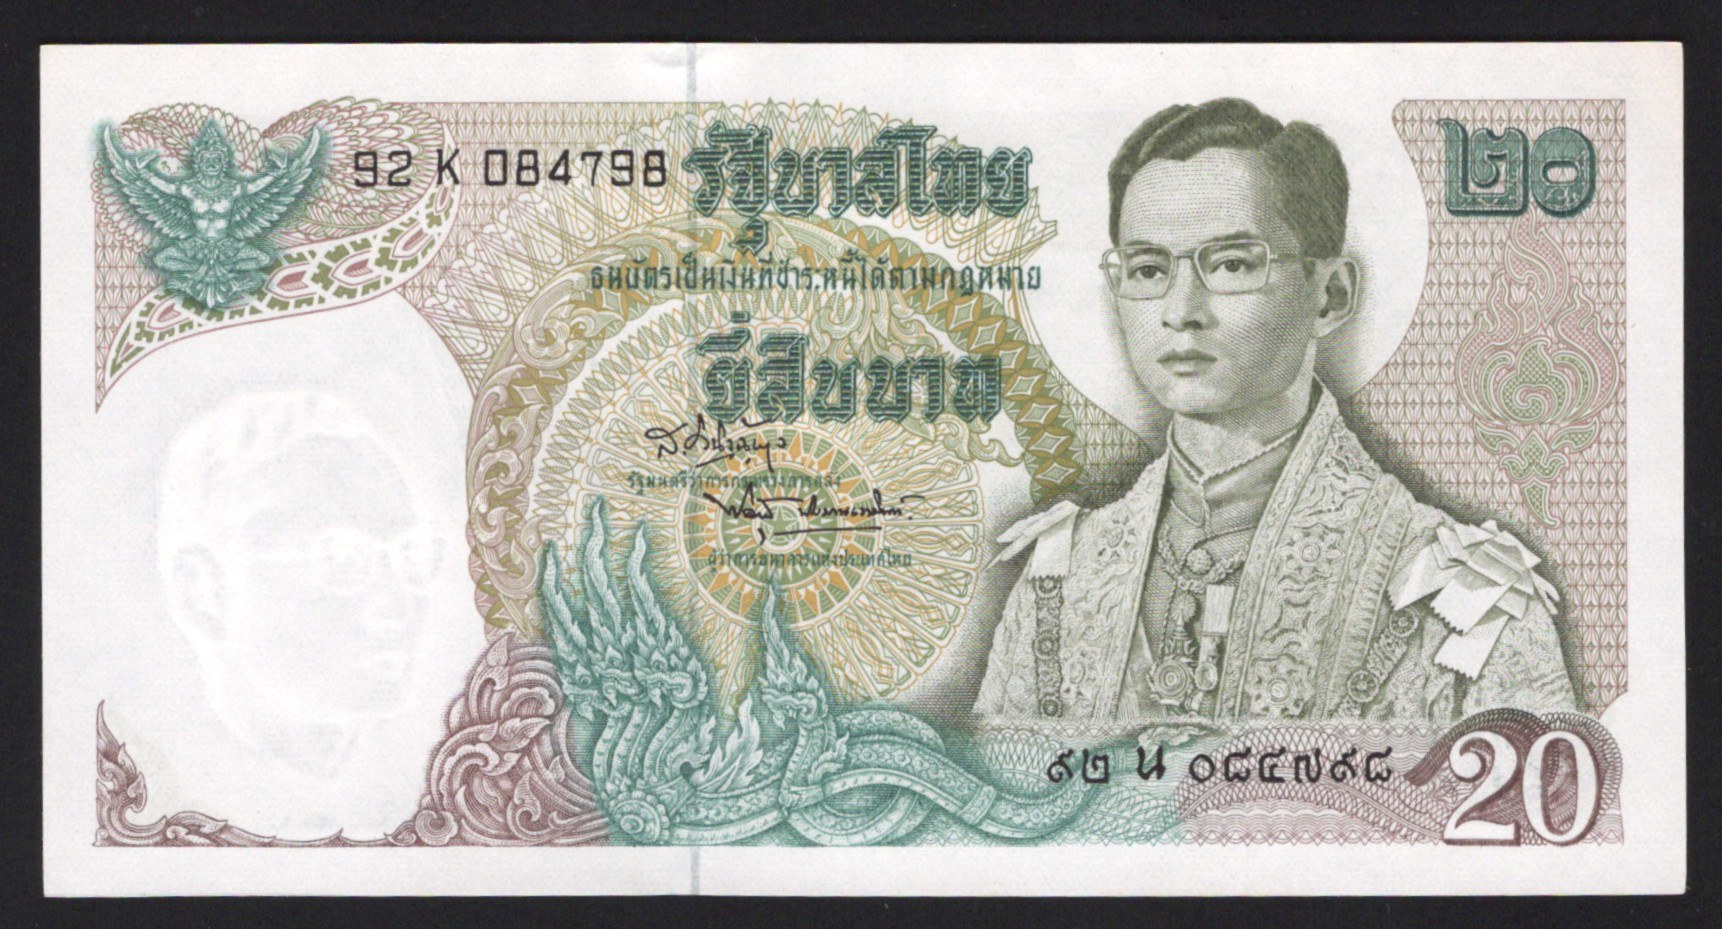 50000 батов в рублях. Банкноты Тайланда 20 бат. Банкнота Таиланда 20 бат 2003. 20 Бат банкнота Тайланда 1981. Банкнота 20 бат Тайланд в рублях.